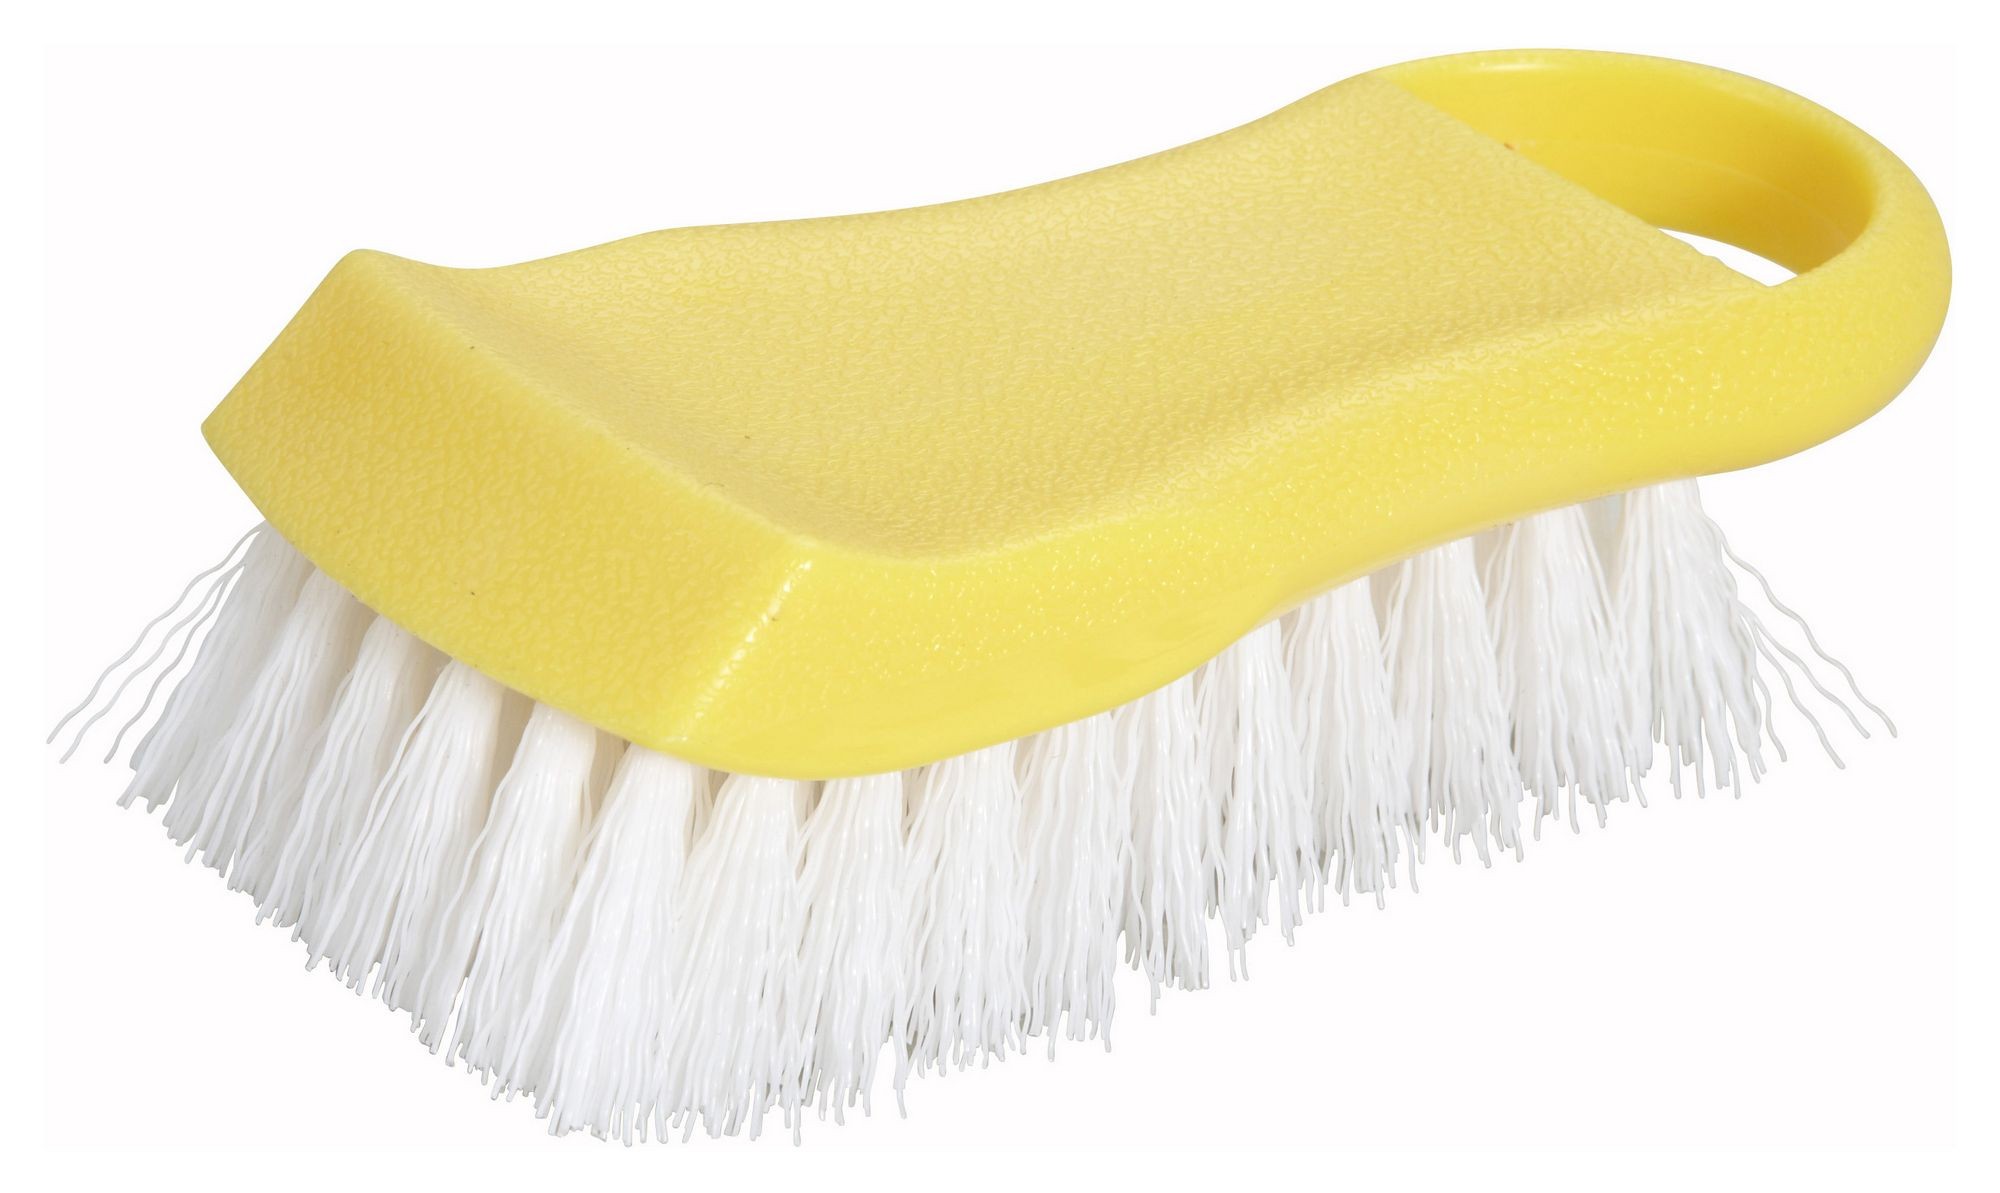 Natural Tampico Upholstery & Carpet Scrub Brush